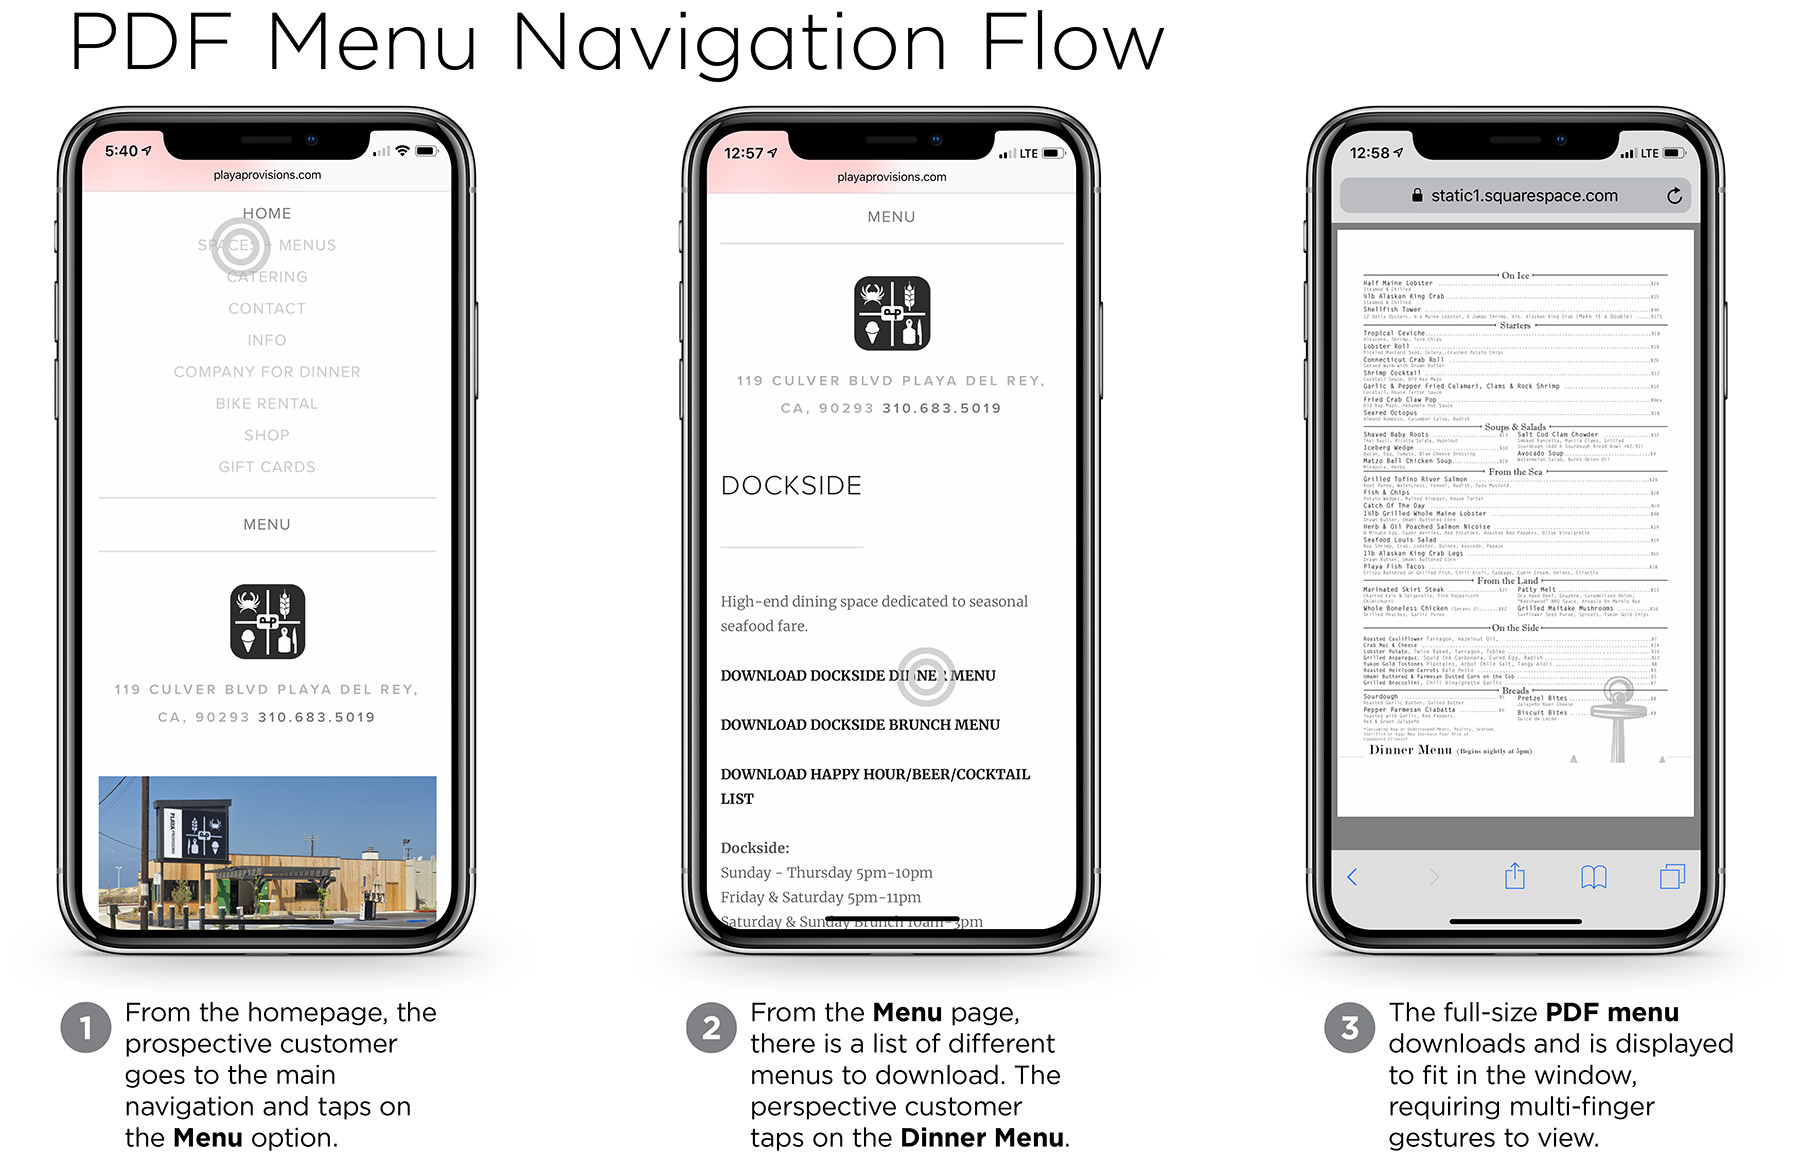 PDF Menus navigation flow for your restaurant